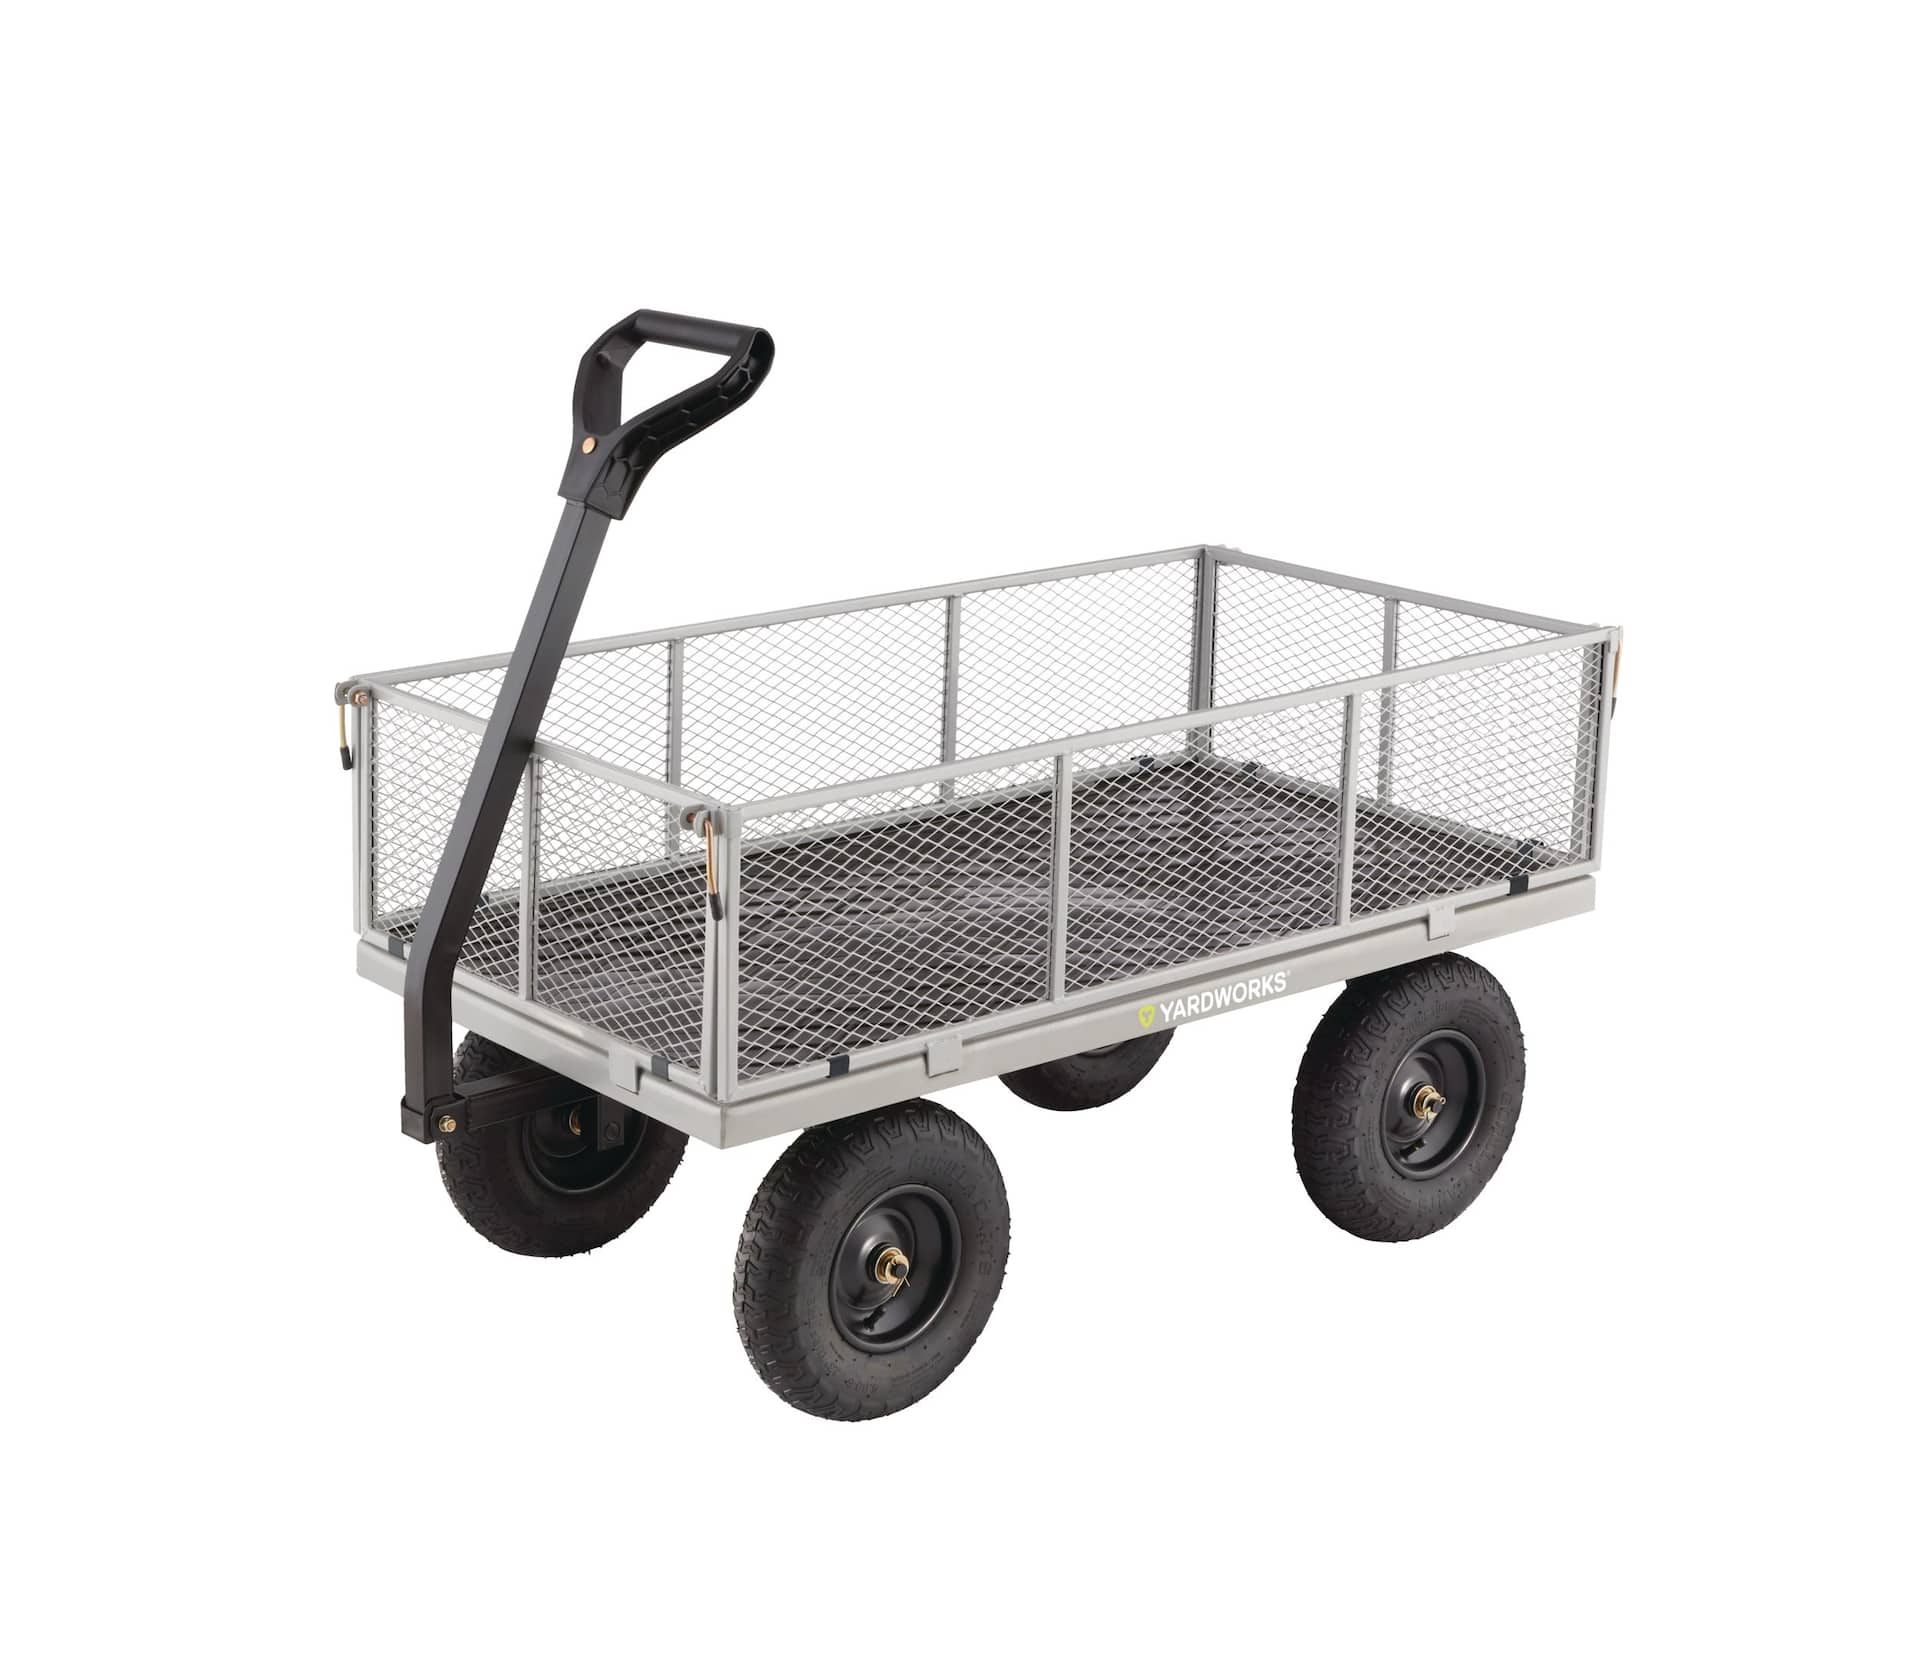 Yardworks Steel Tray 4-Wheel Removable-Sides Mesh Garden/Yard Cart, 1200 lb